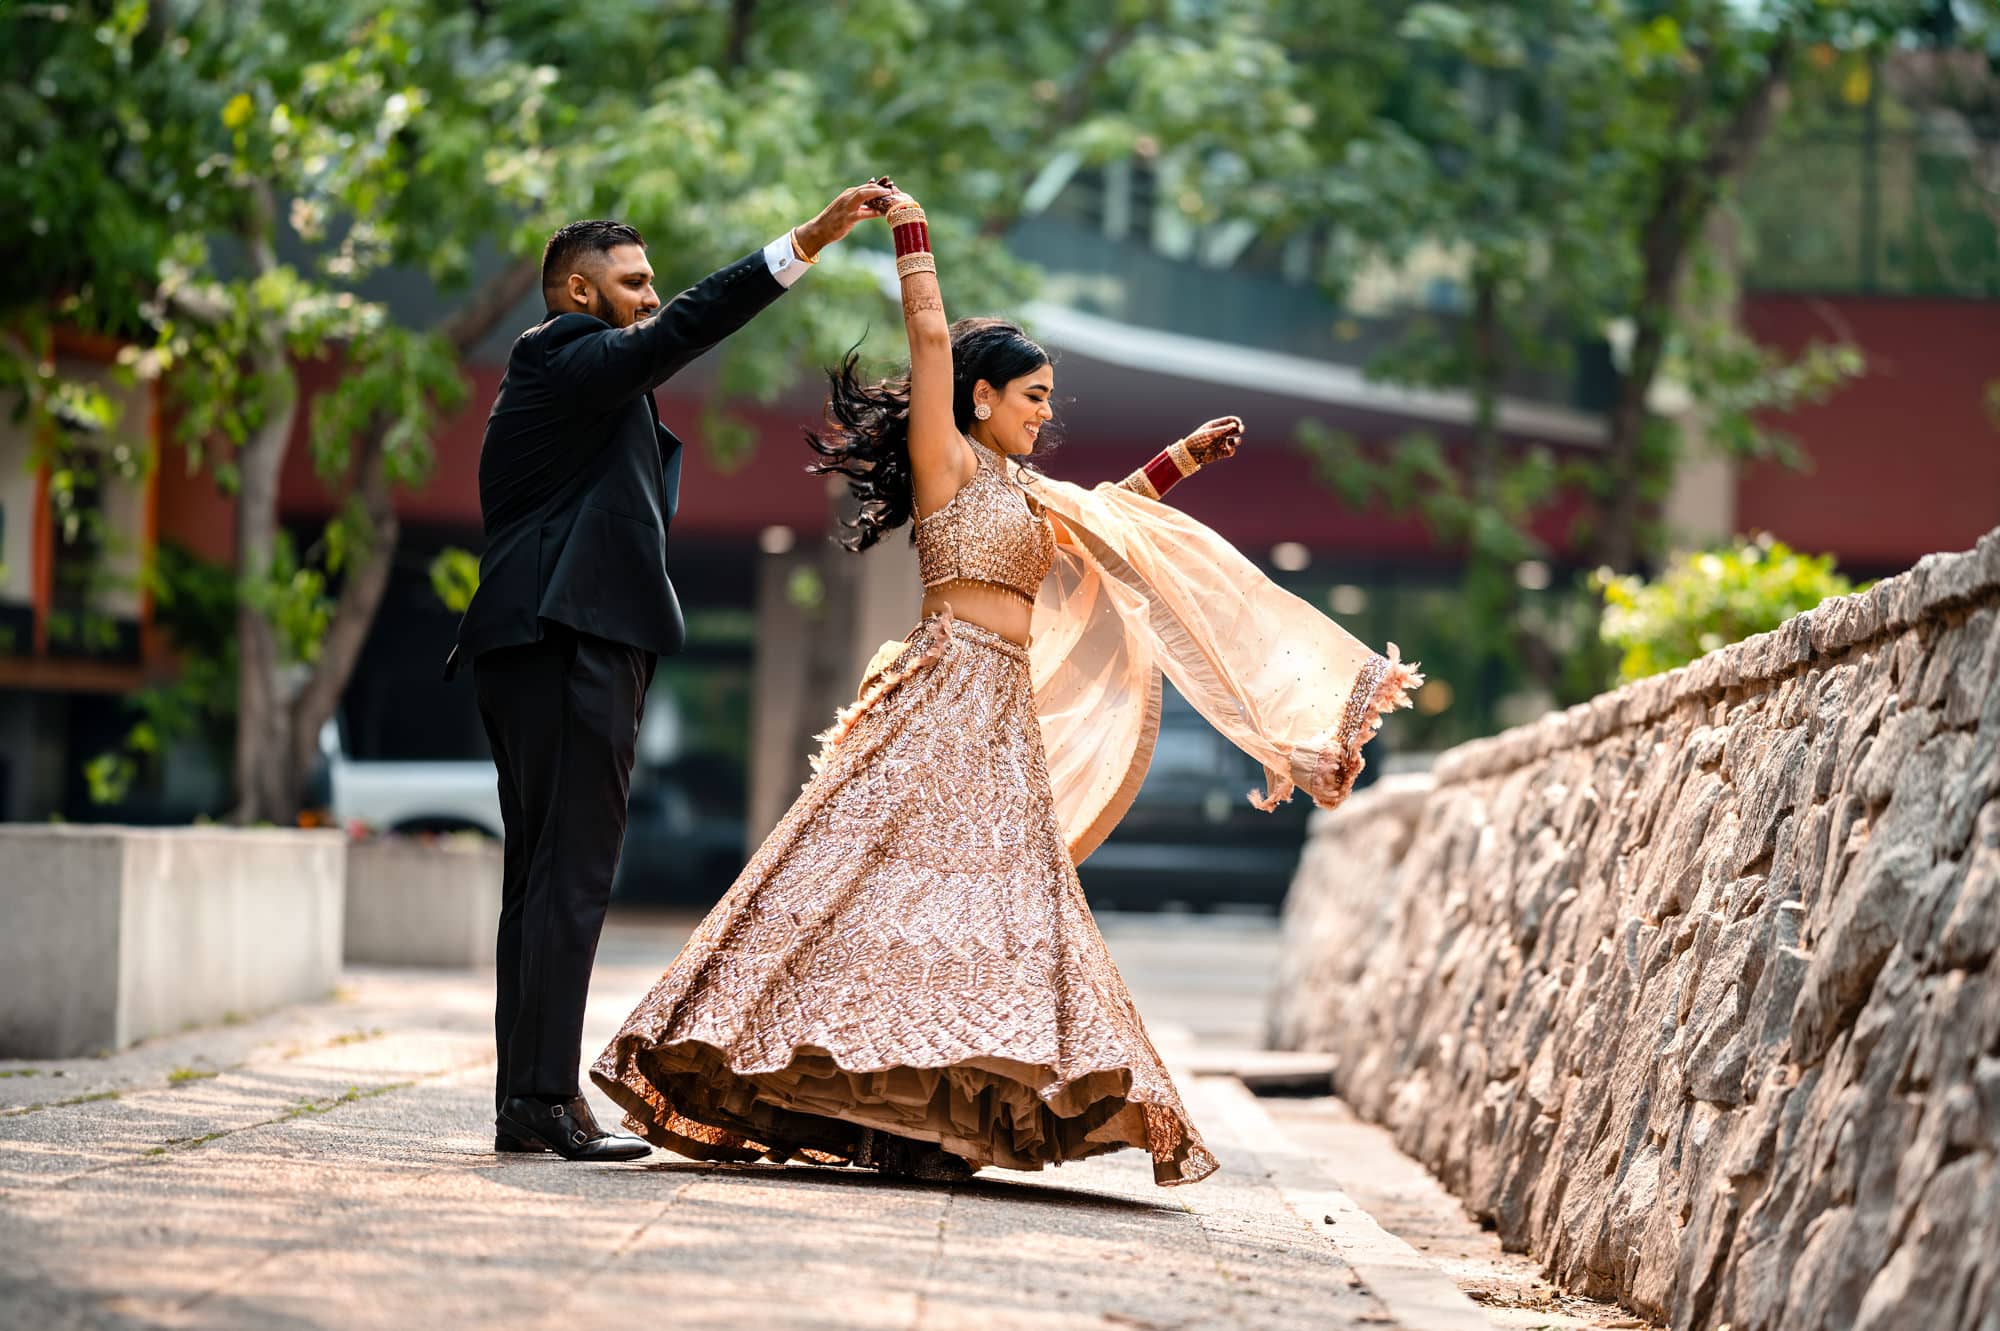 Pin by Arya Prasad on poses | Wedding photoshoot poses, Kerala wedding  photography, Wedding couple poses photography